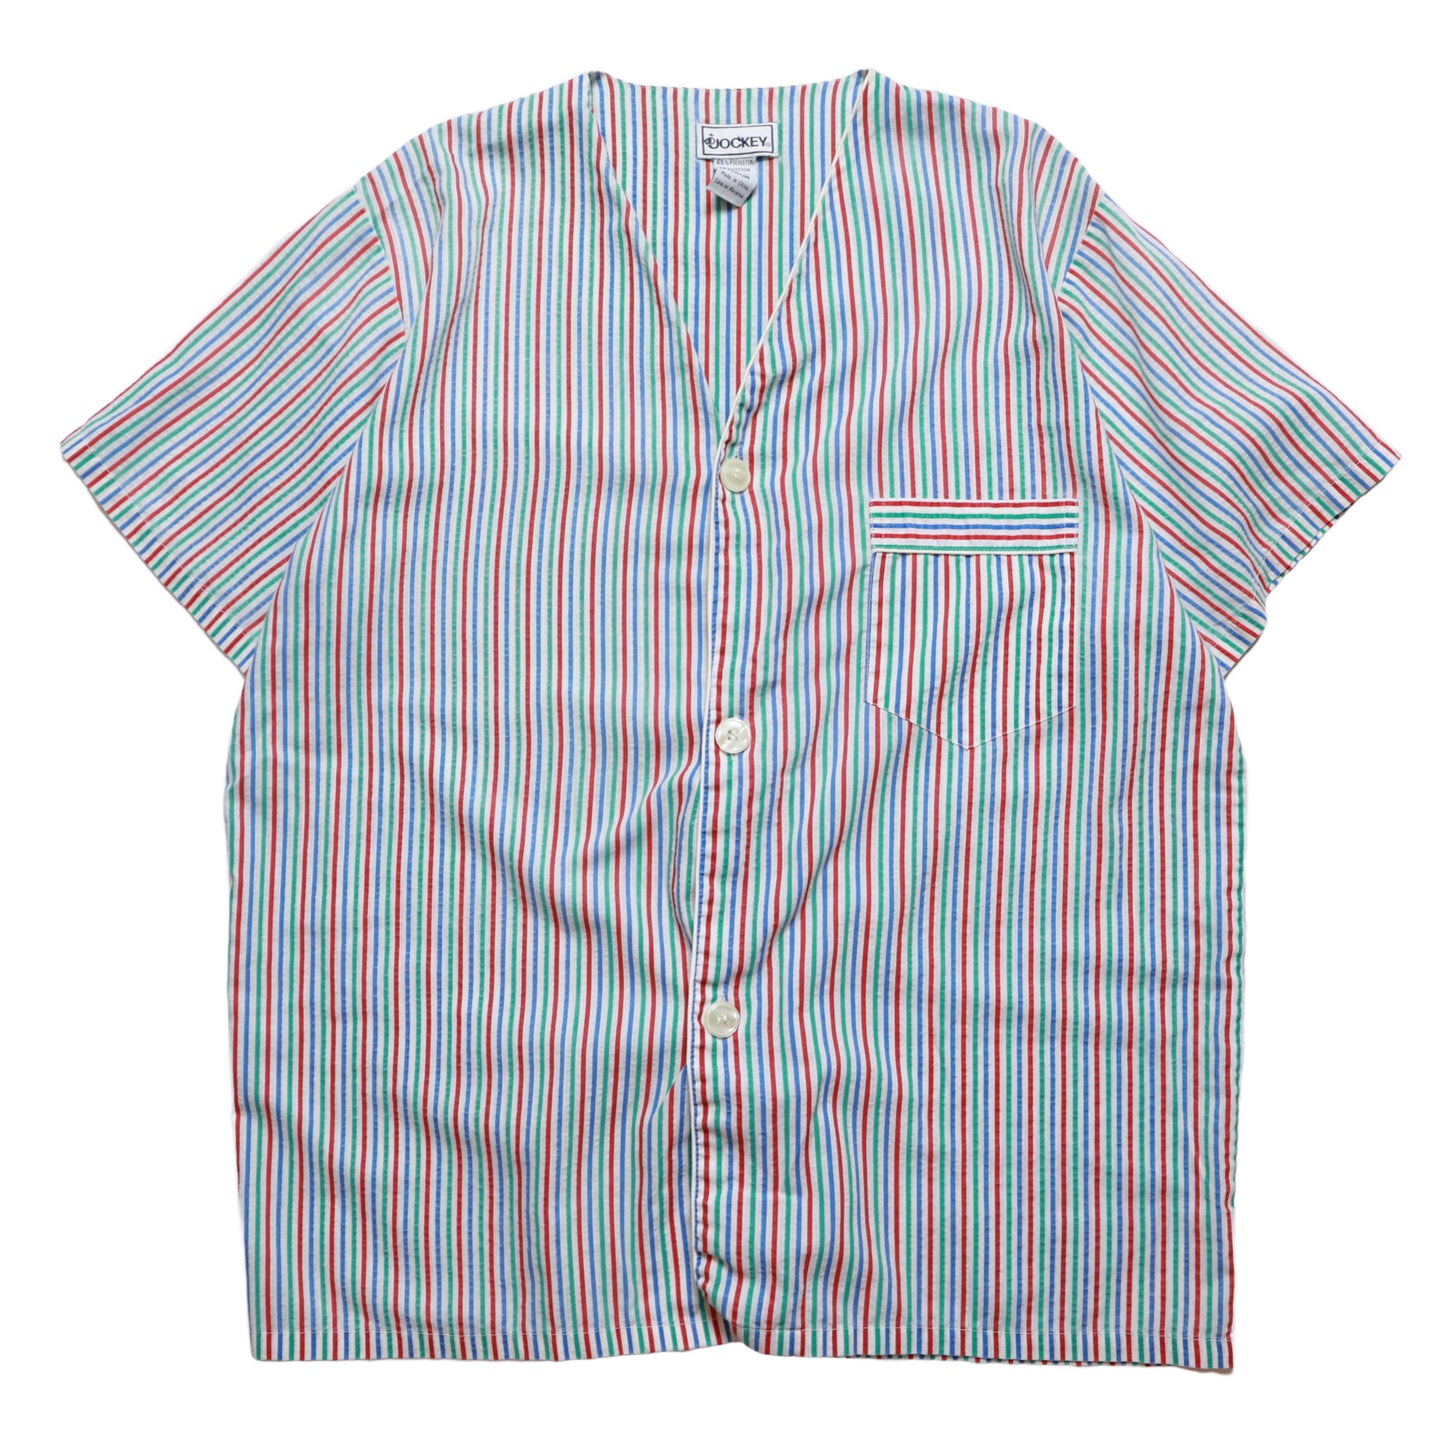 Pajama shirt 彩色條紋睡衣襯衫 條紋罩衫